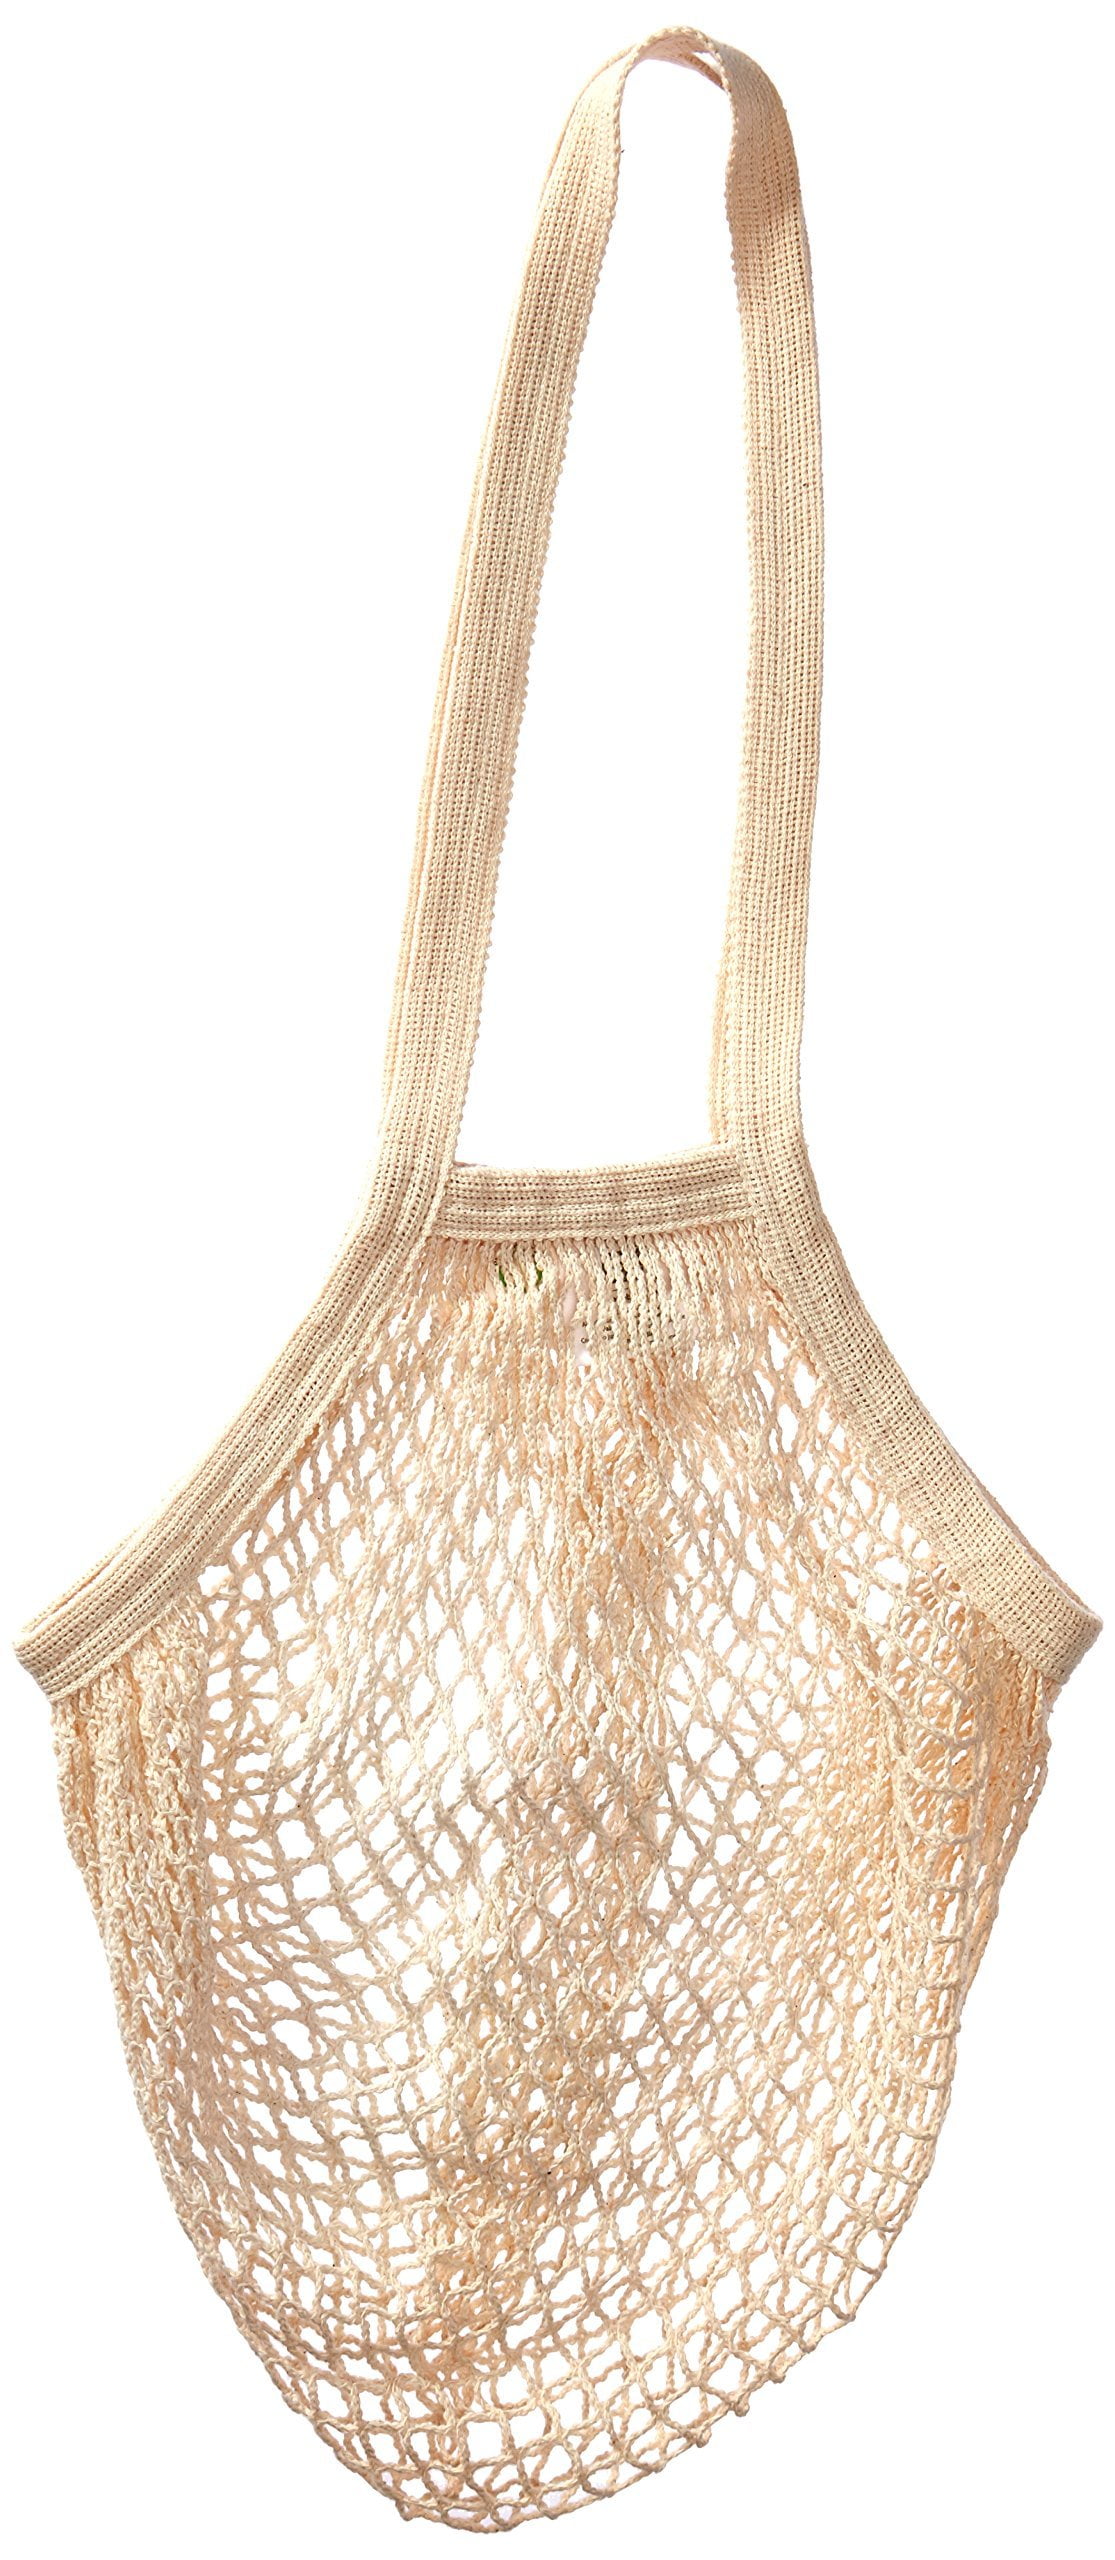 ECOBAGS® Organic String Bag Natural Color Tote Handle 